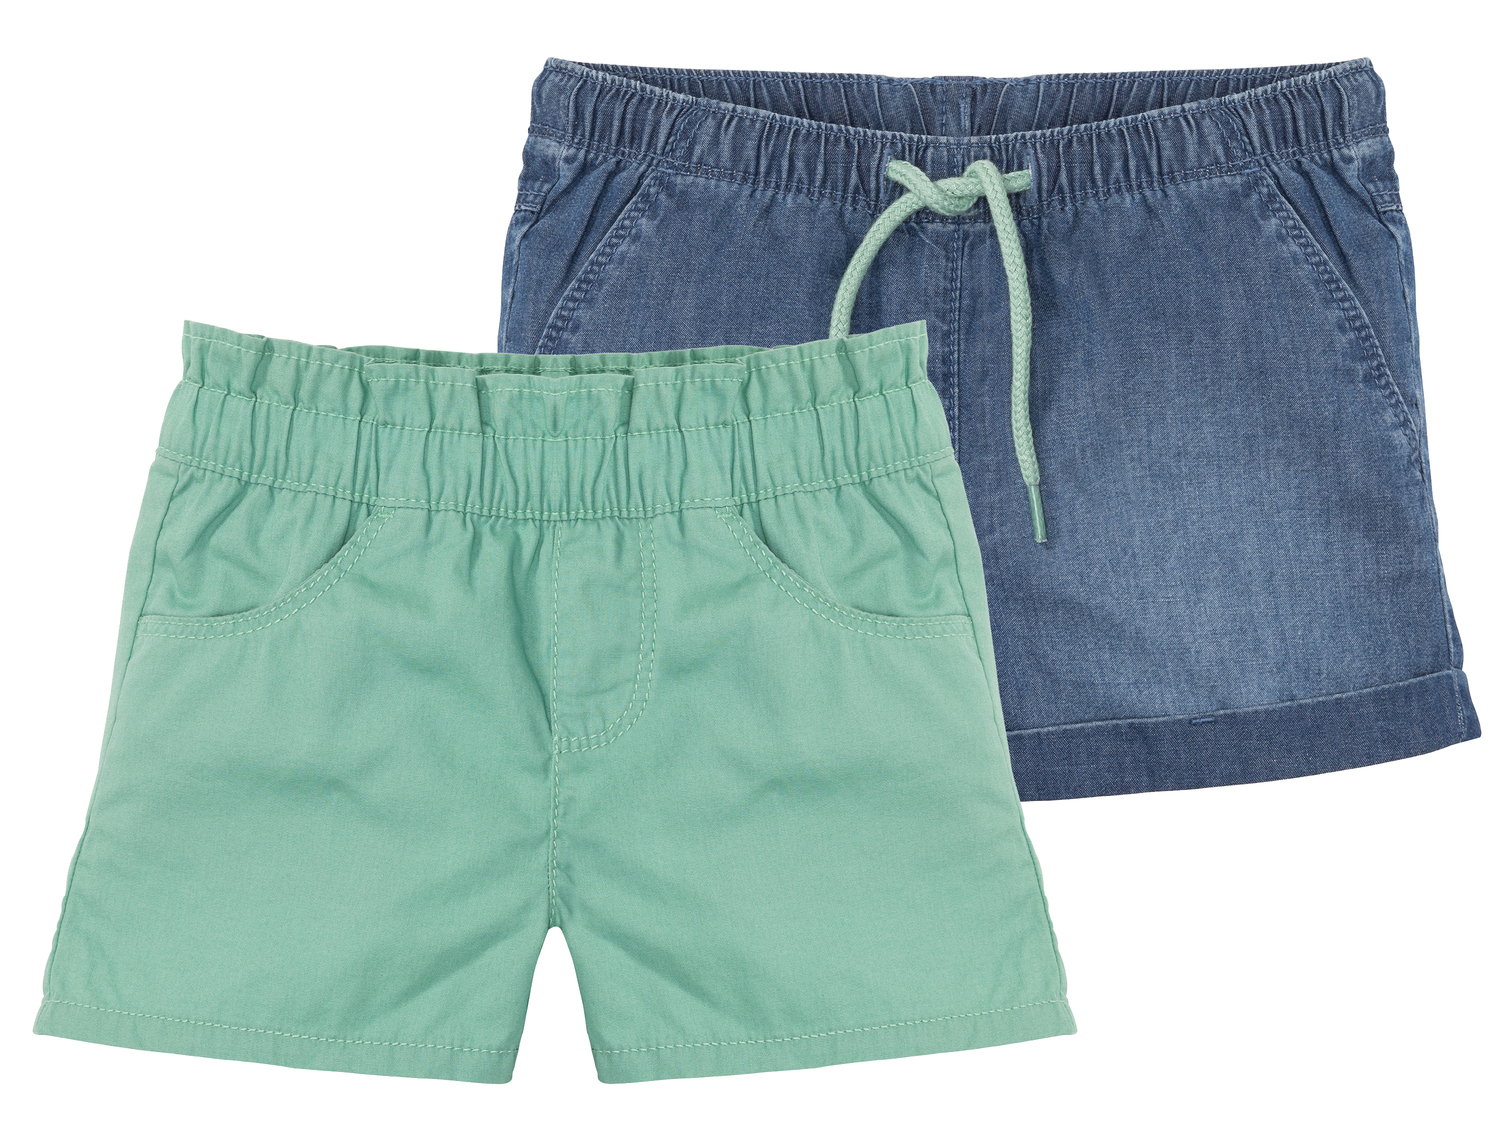 Shorts da bambina Lupilu, prezzo 6.99 &#8364; 
2 pezzi - Misure: 1-6 anni
Taglie ...